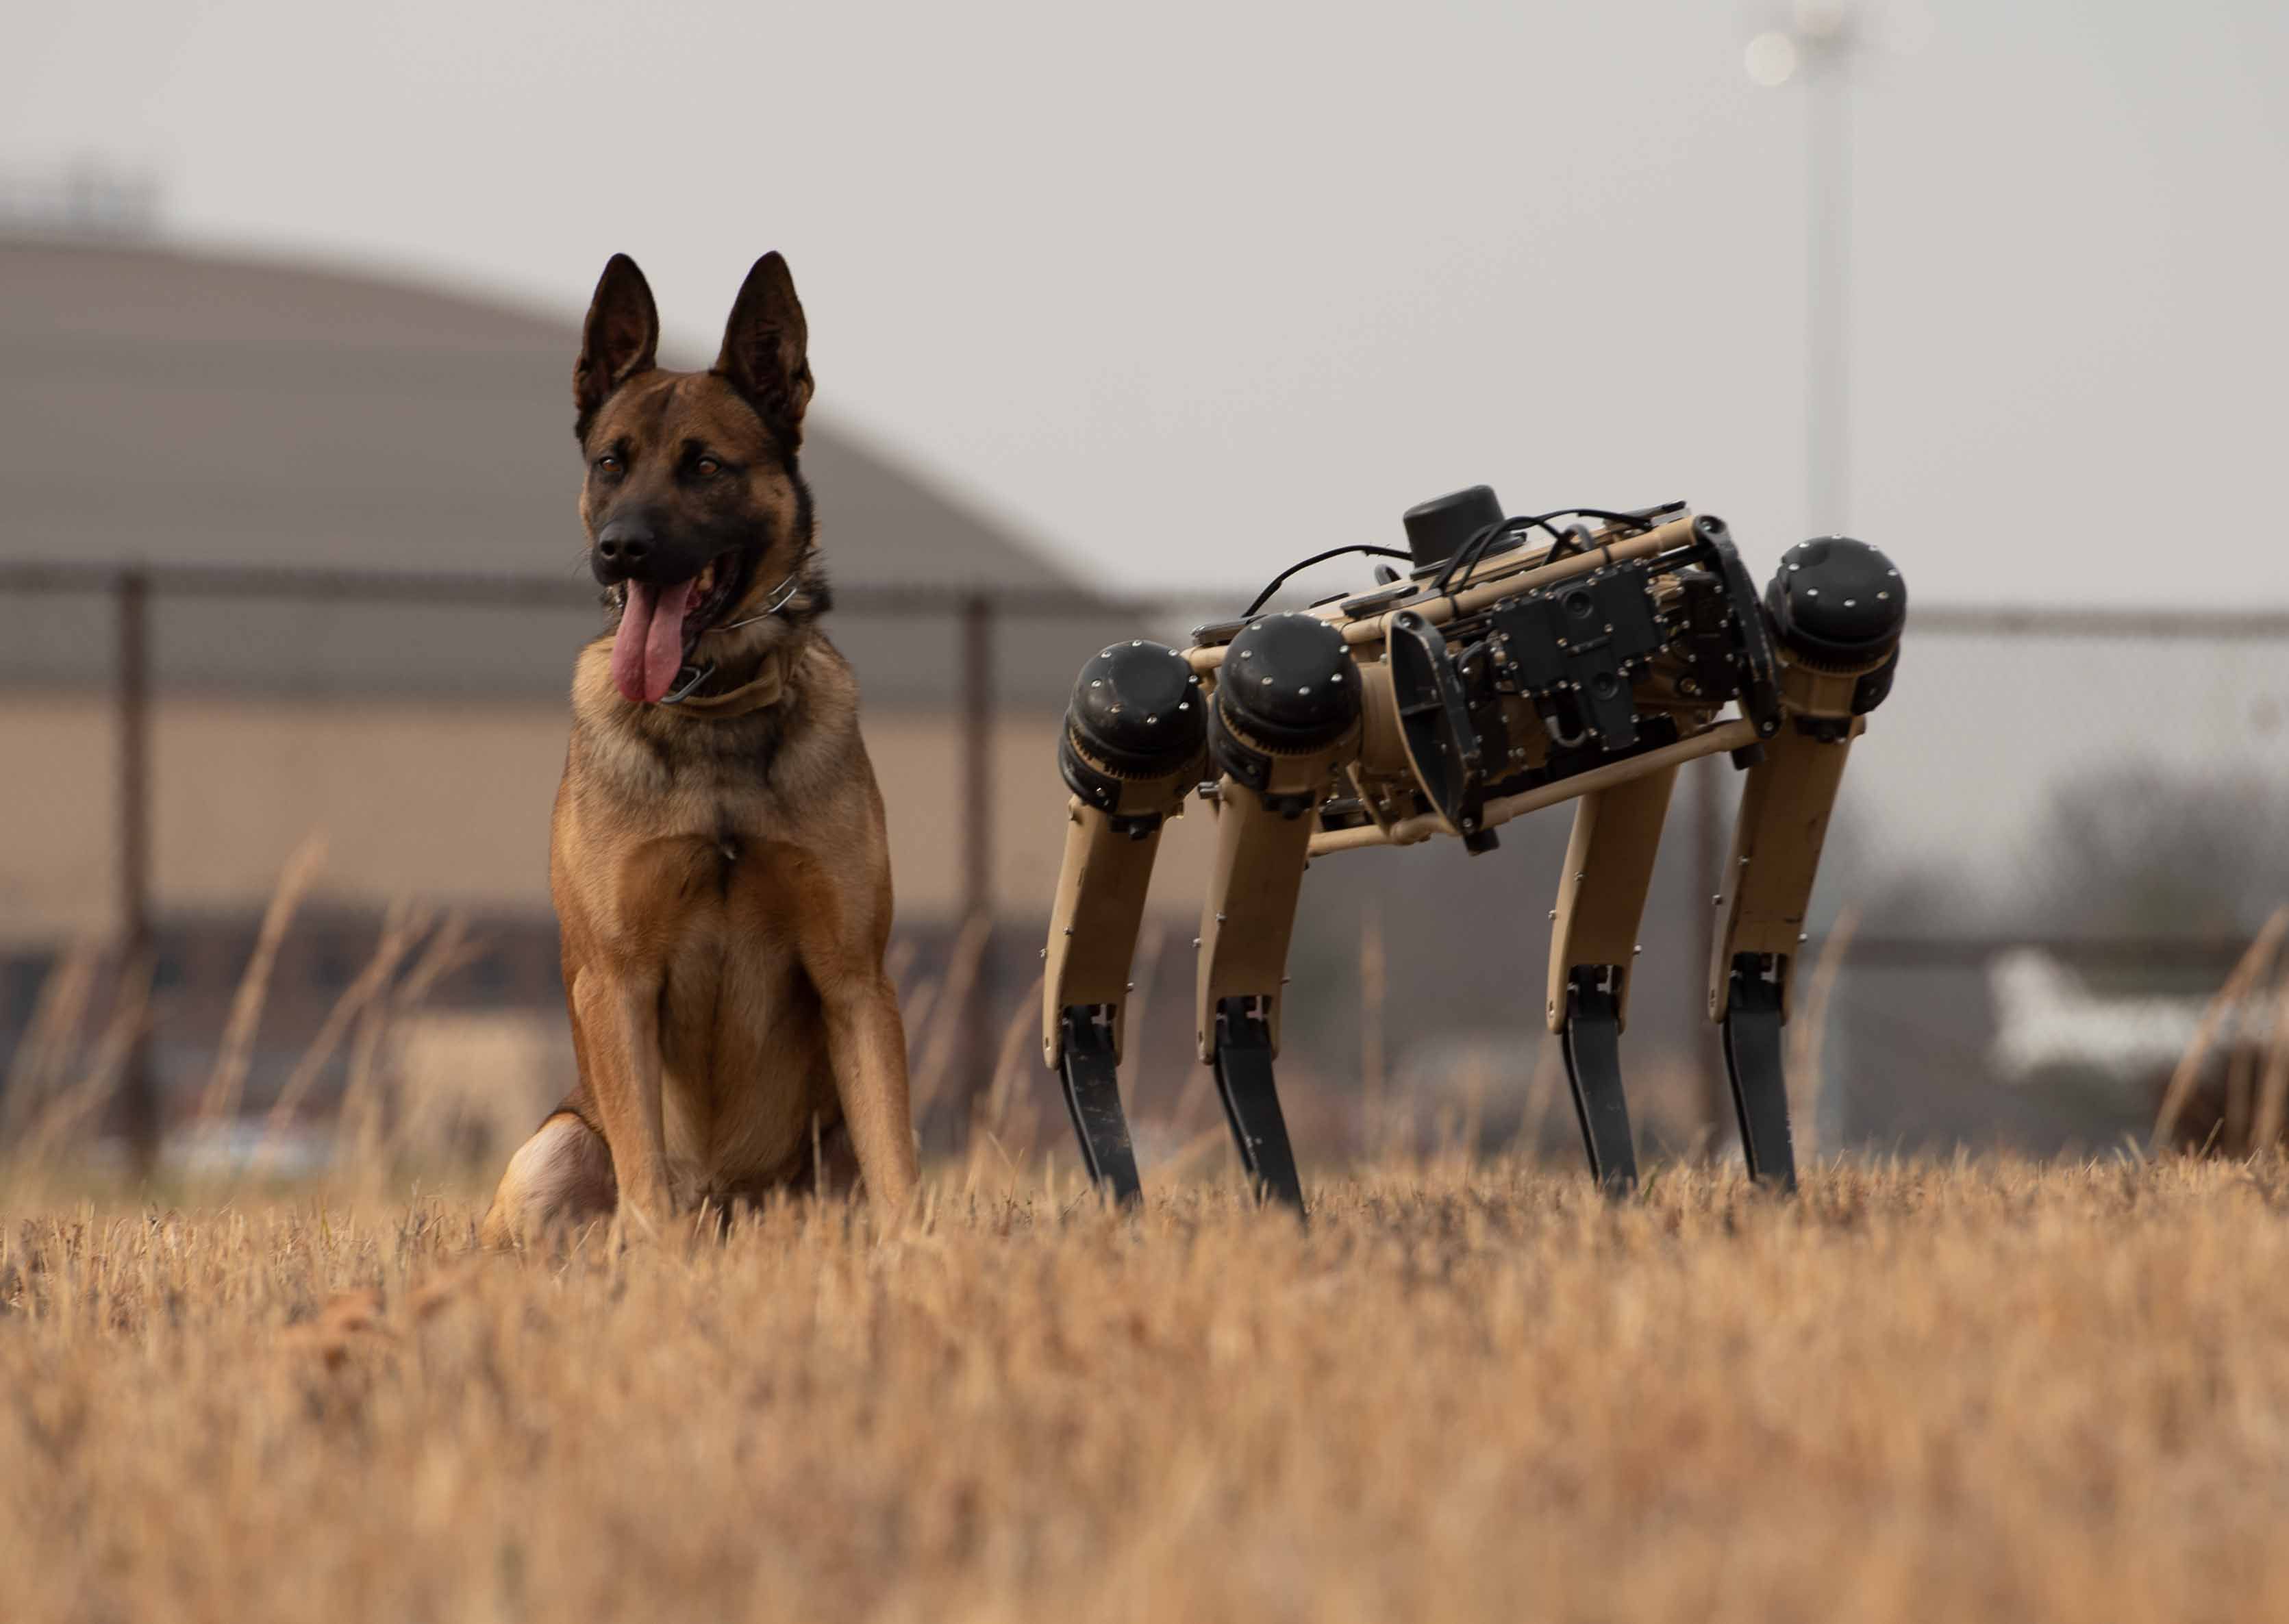 Fabricante militar presenta perro robot armado con un rifle – DW –  18/10/2021